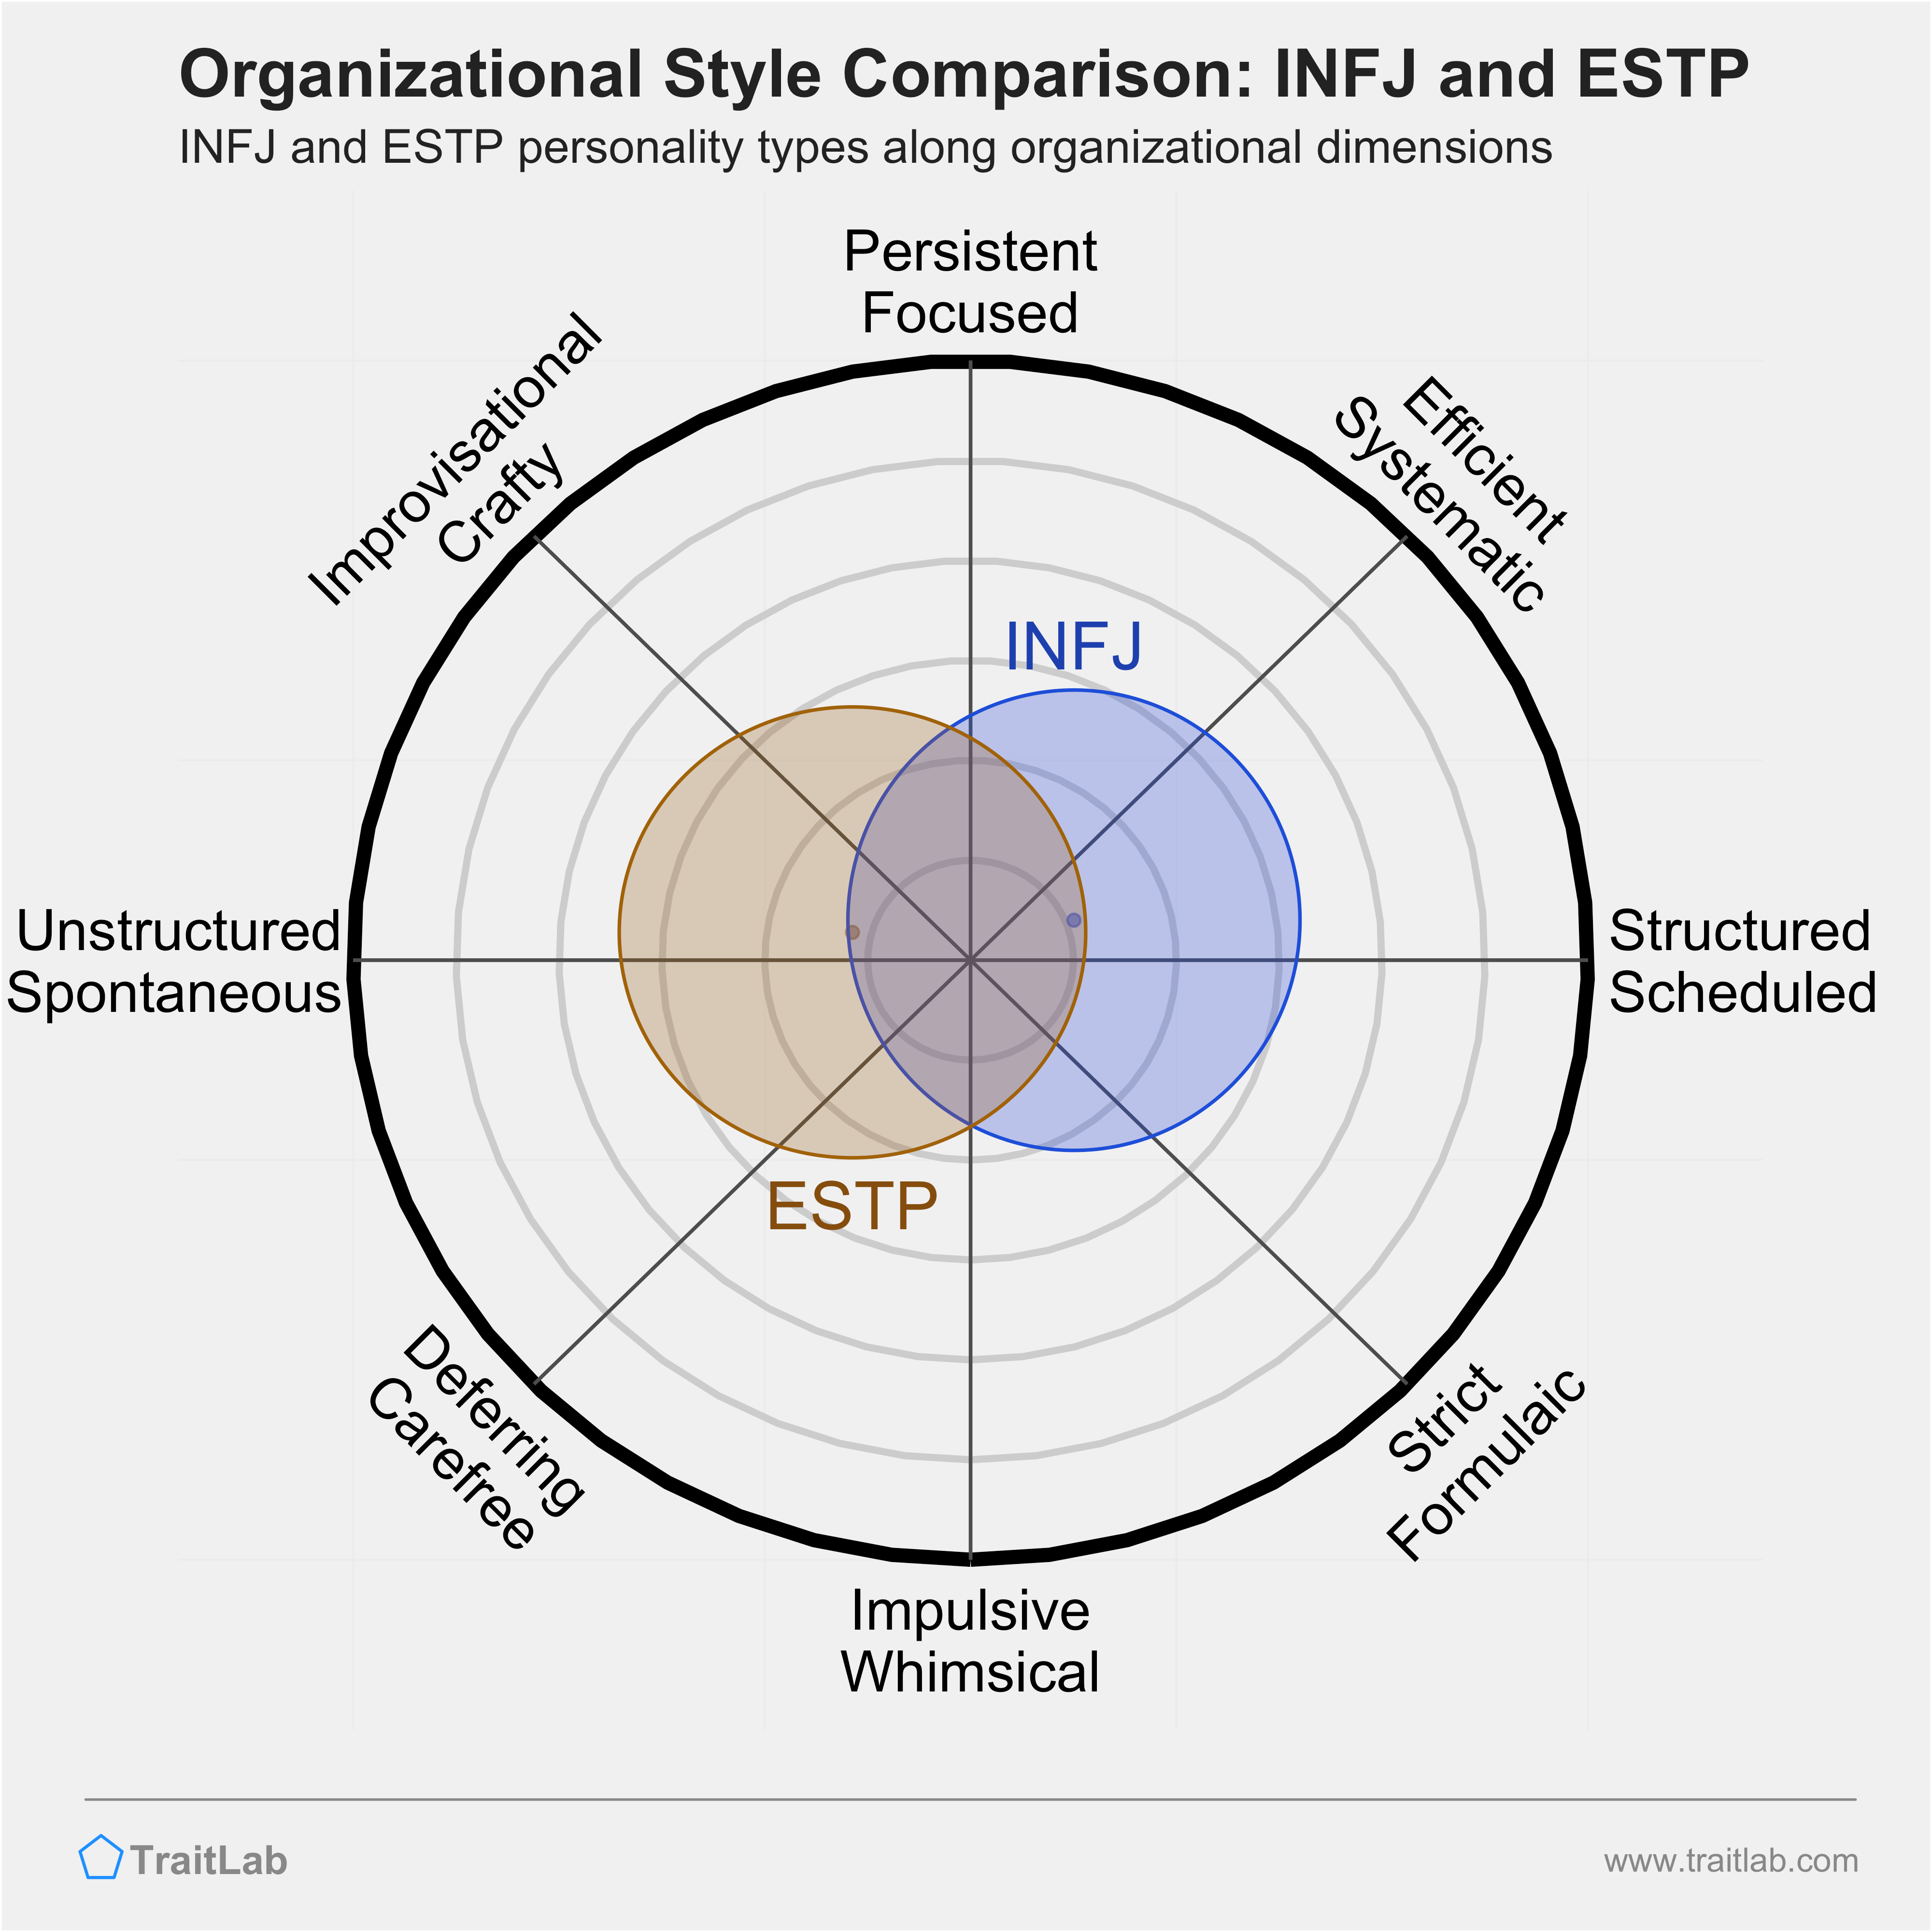 INFJ and ESTP comparison across organizational dimensions